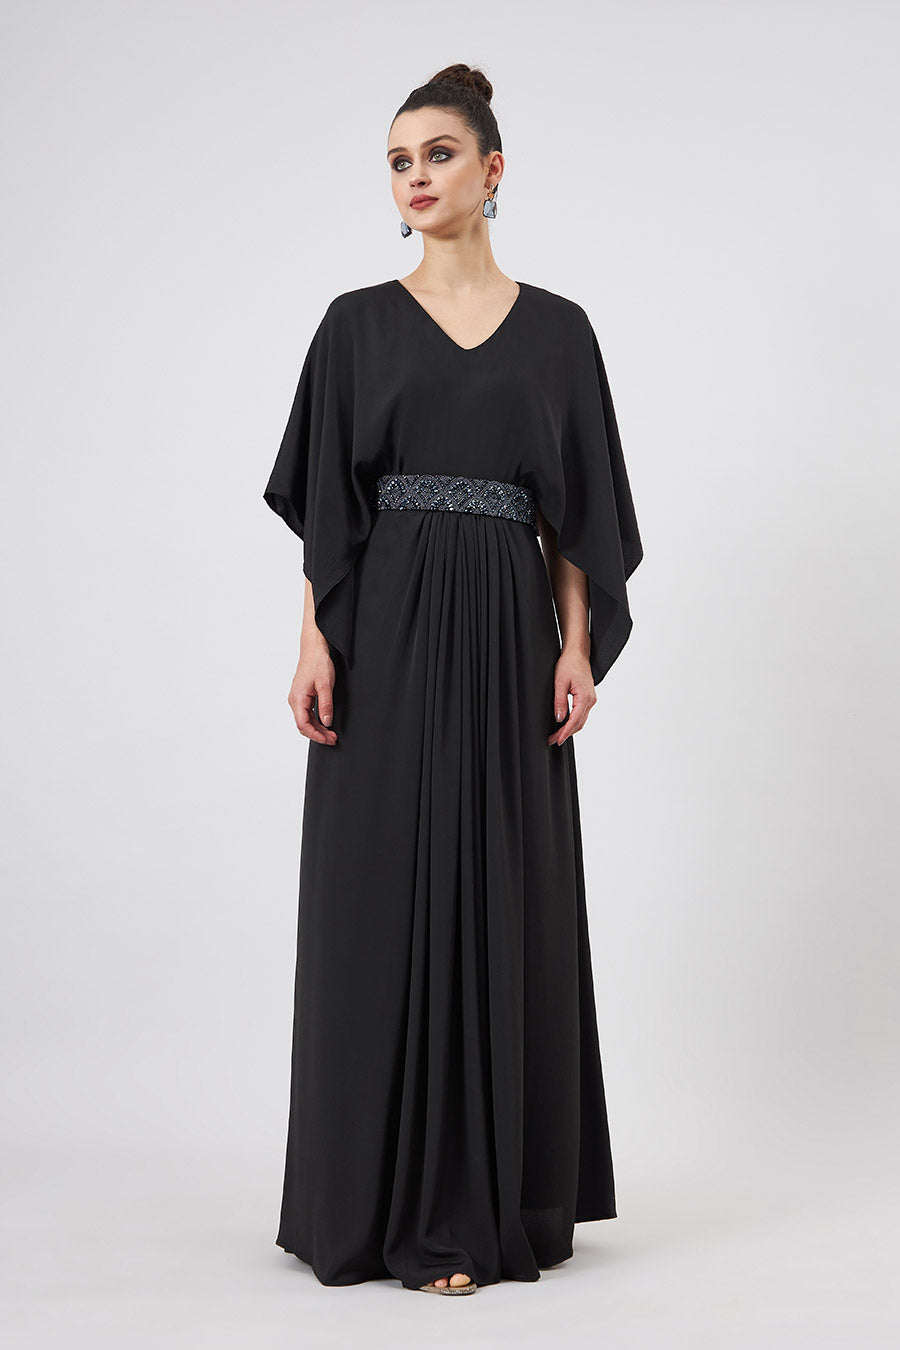 Black Drape Dress With Emebllished Belt